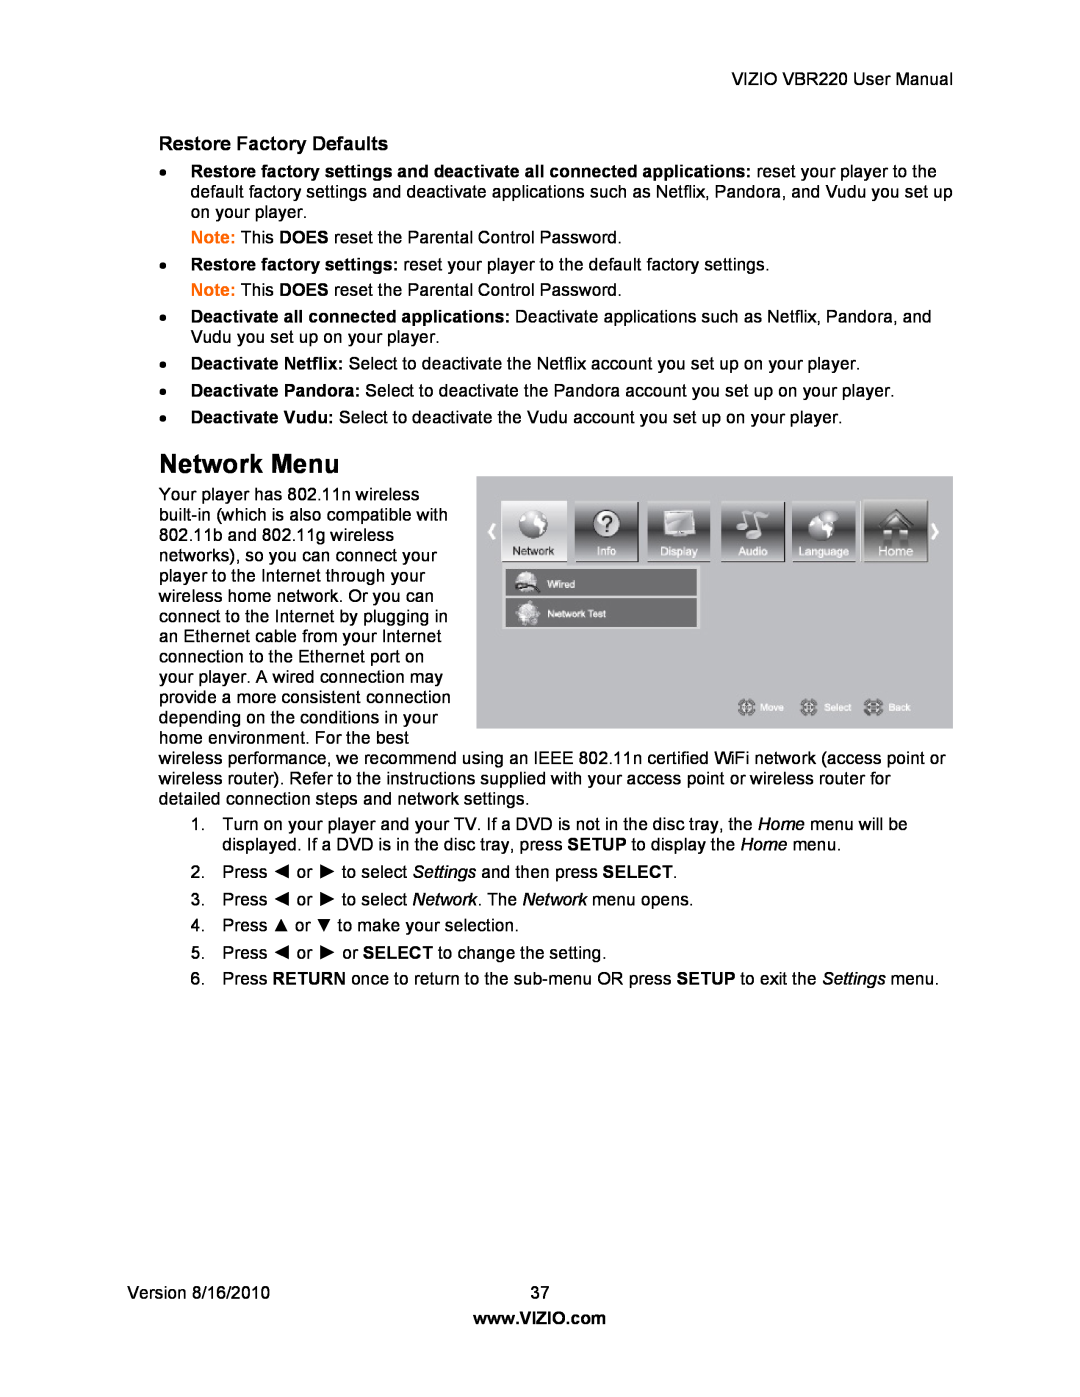 Panasonic VBR220 user manual Network Menu, Restore Factory Defaults 